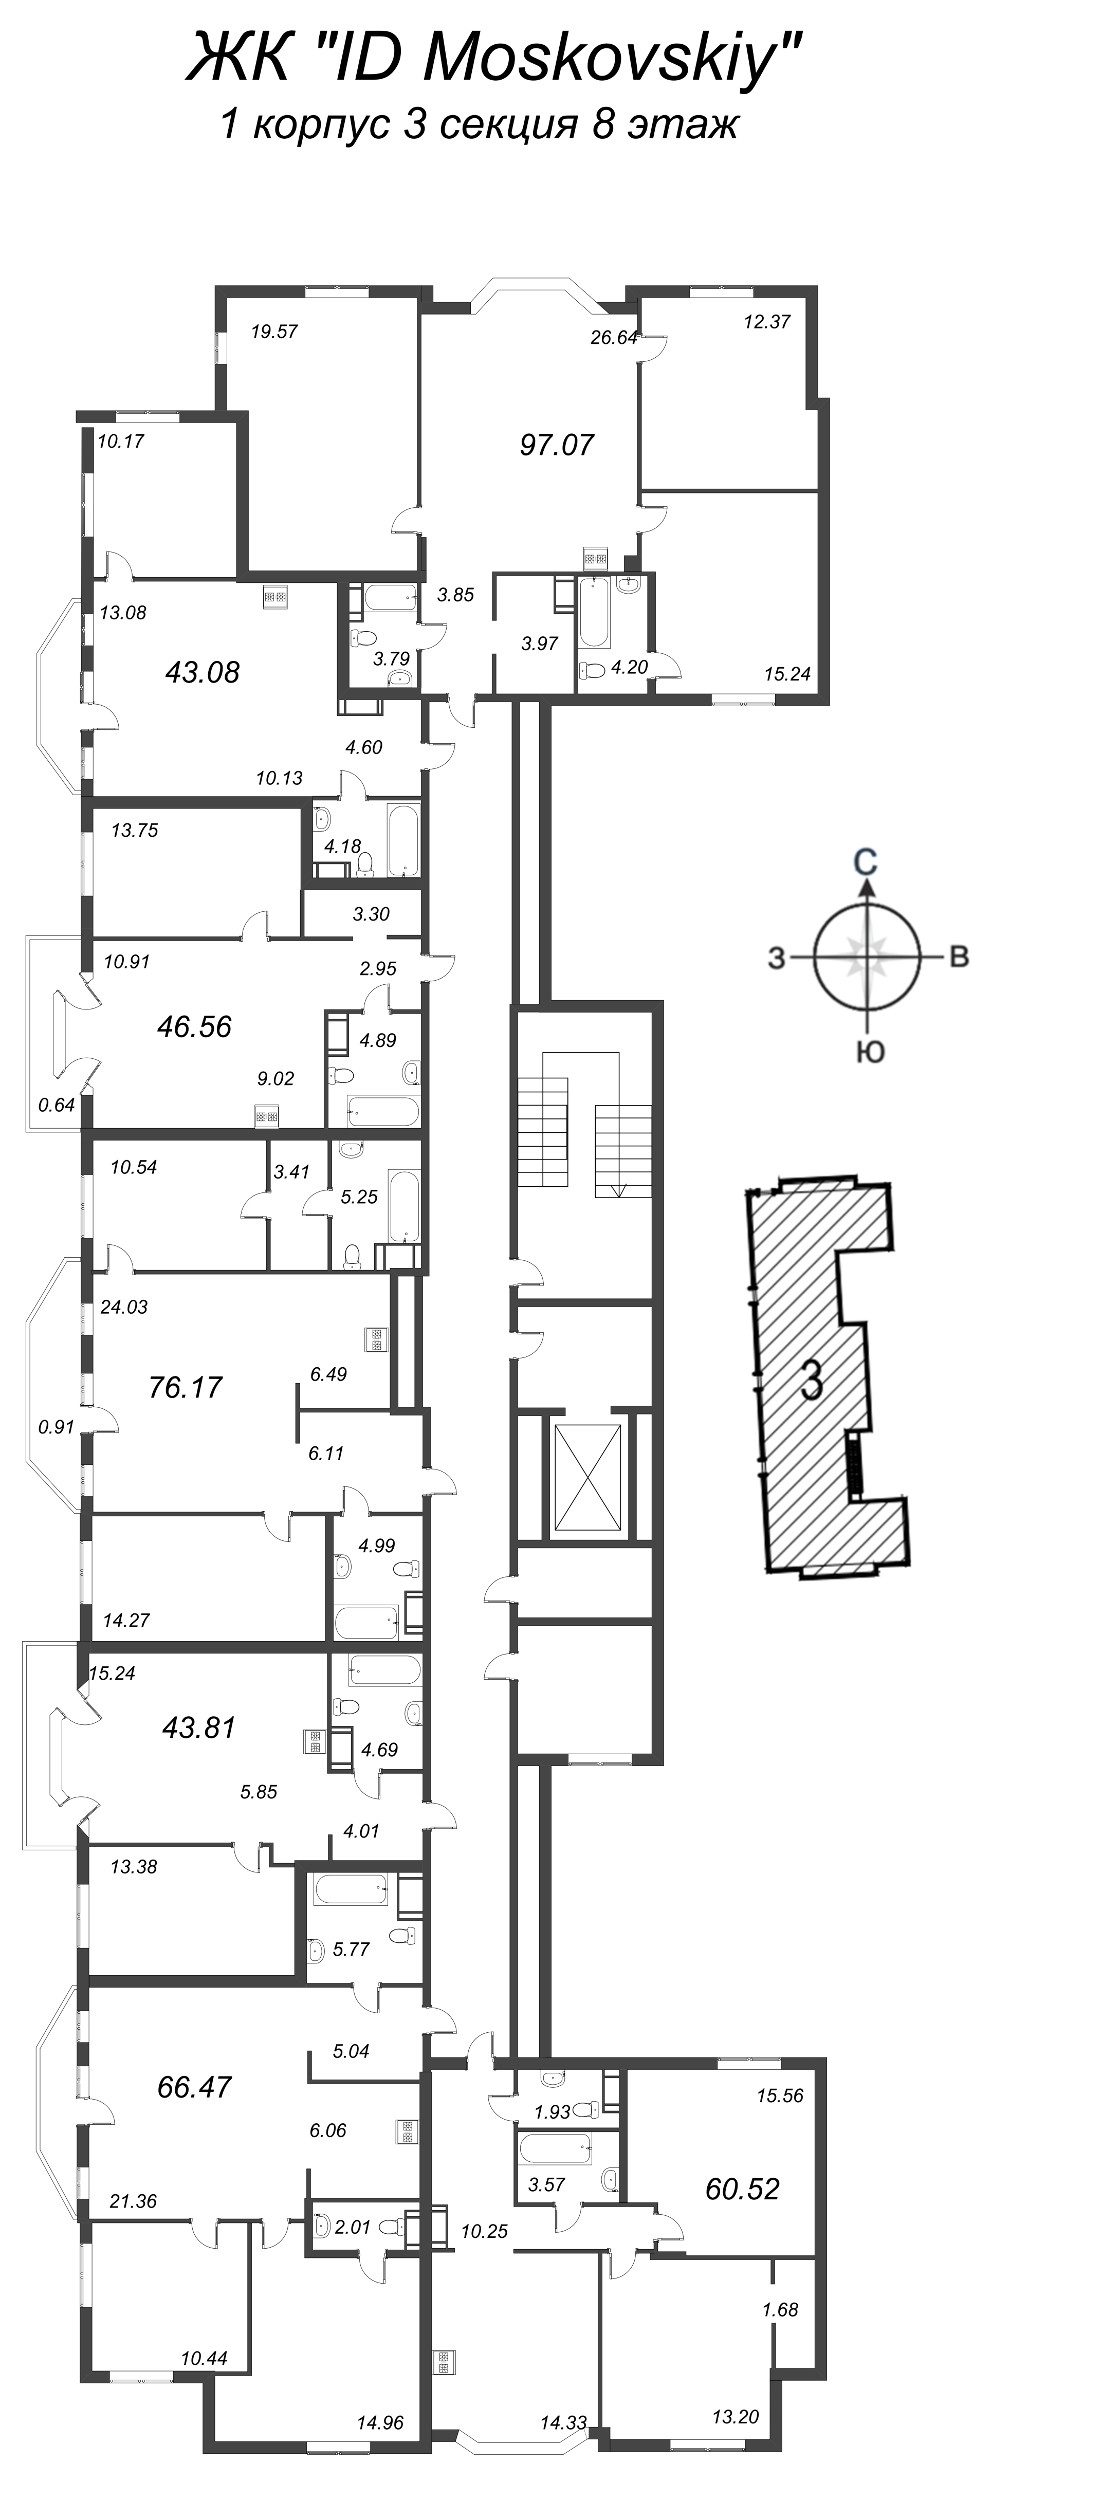 4-комнатная (Евро) квартира, 89.63 м² - планировка этажа